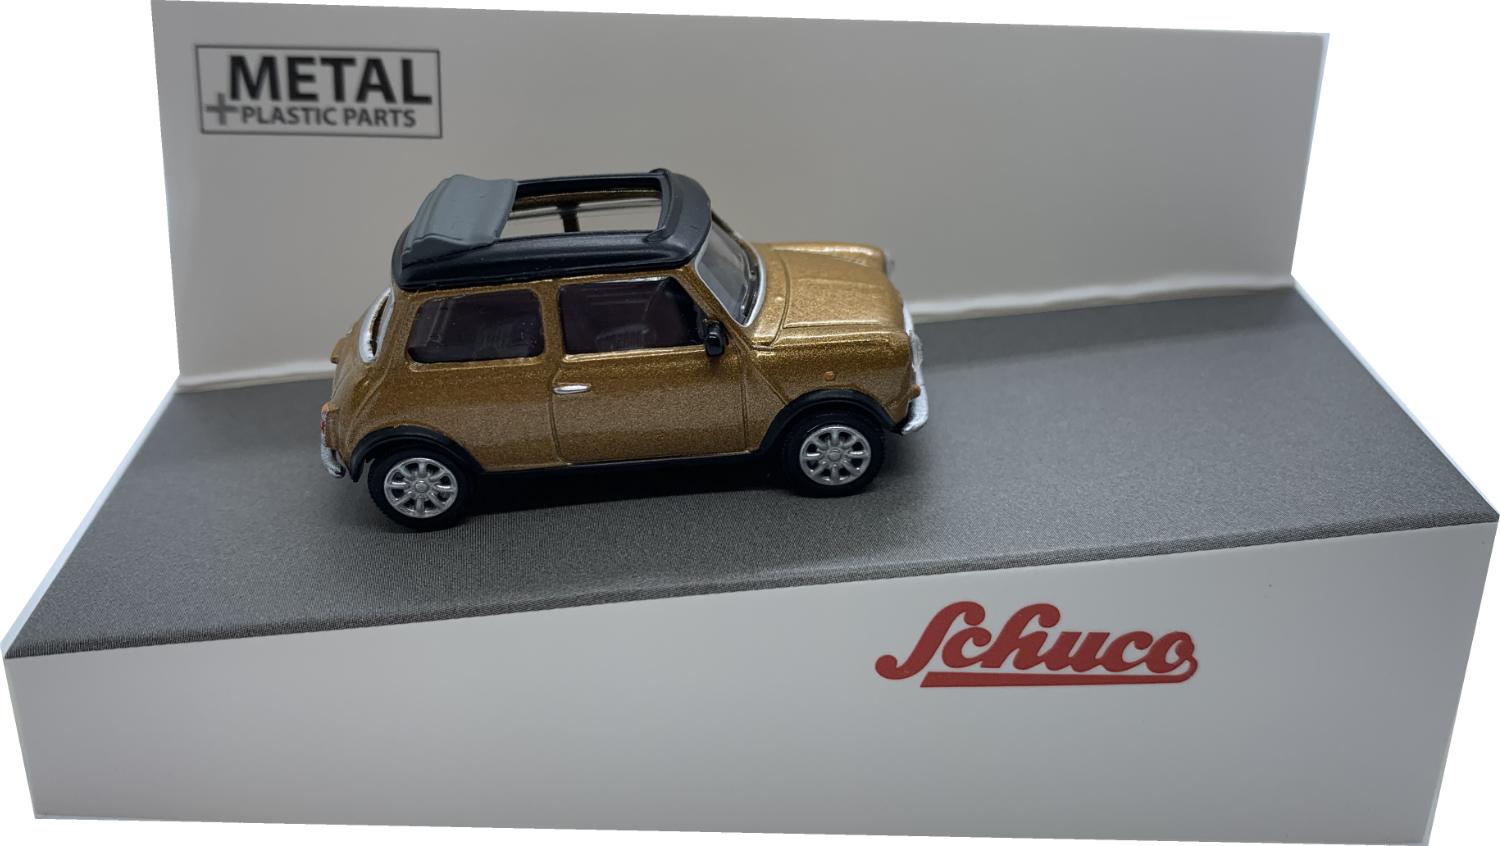 Mini Cooper in metallic brown 1:64 scale model from Schuco